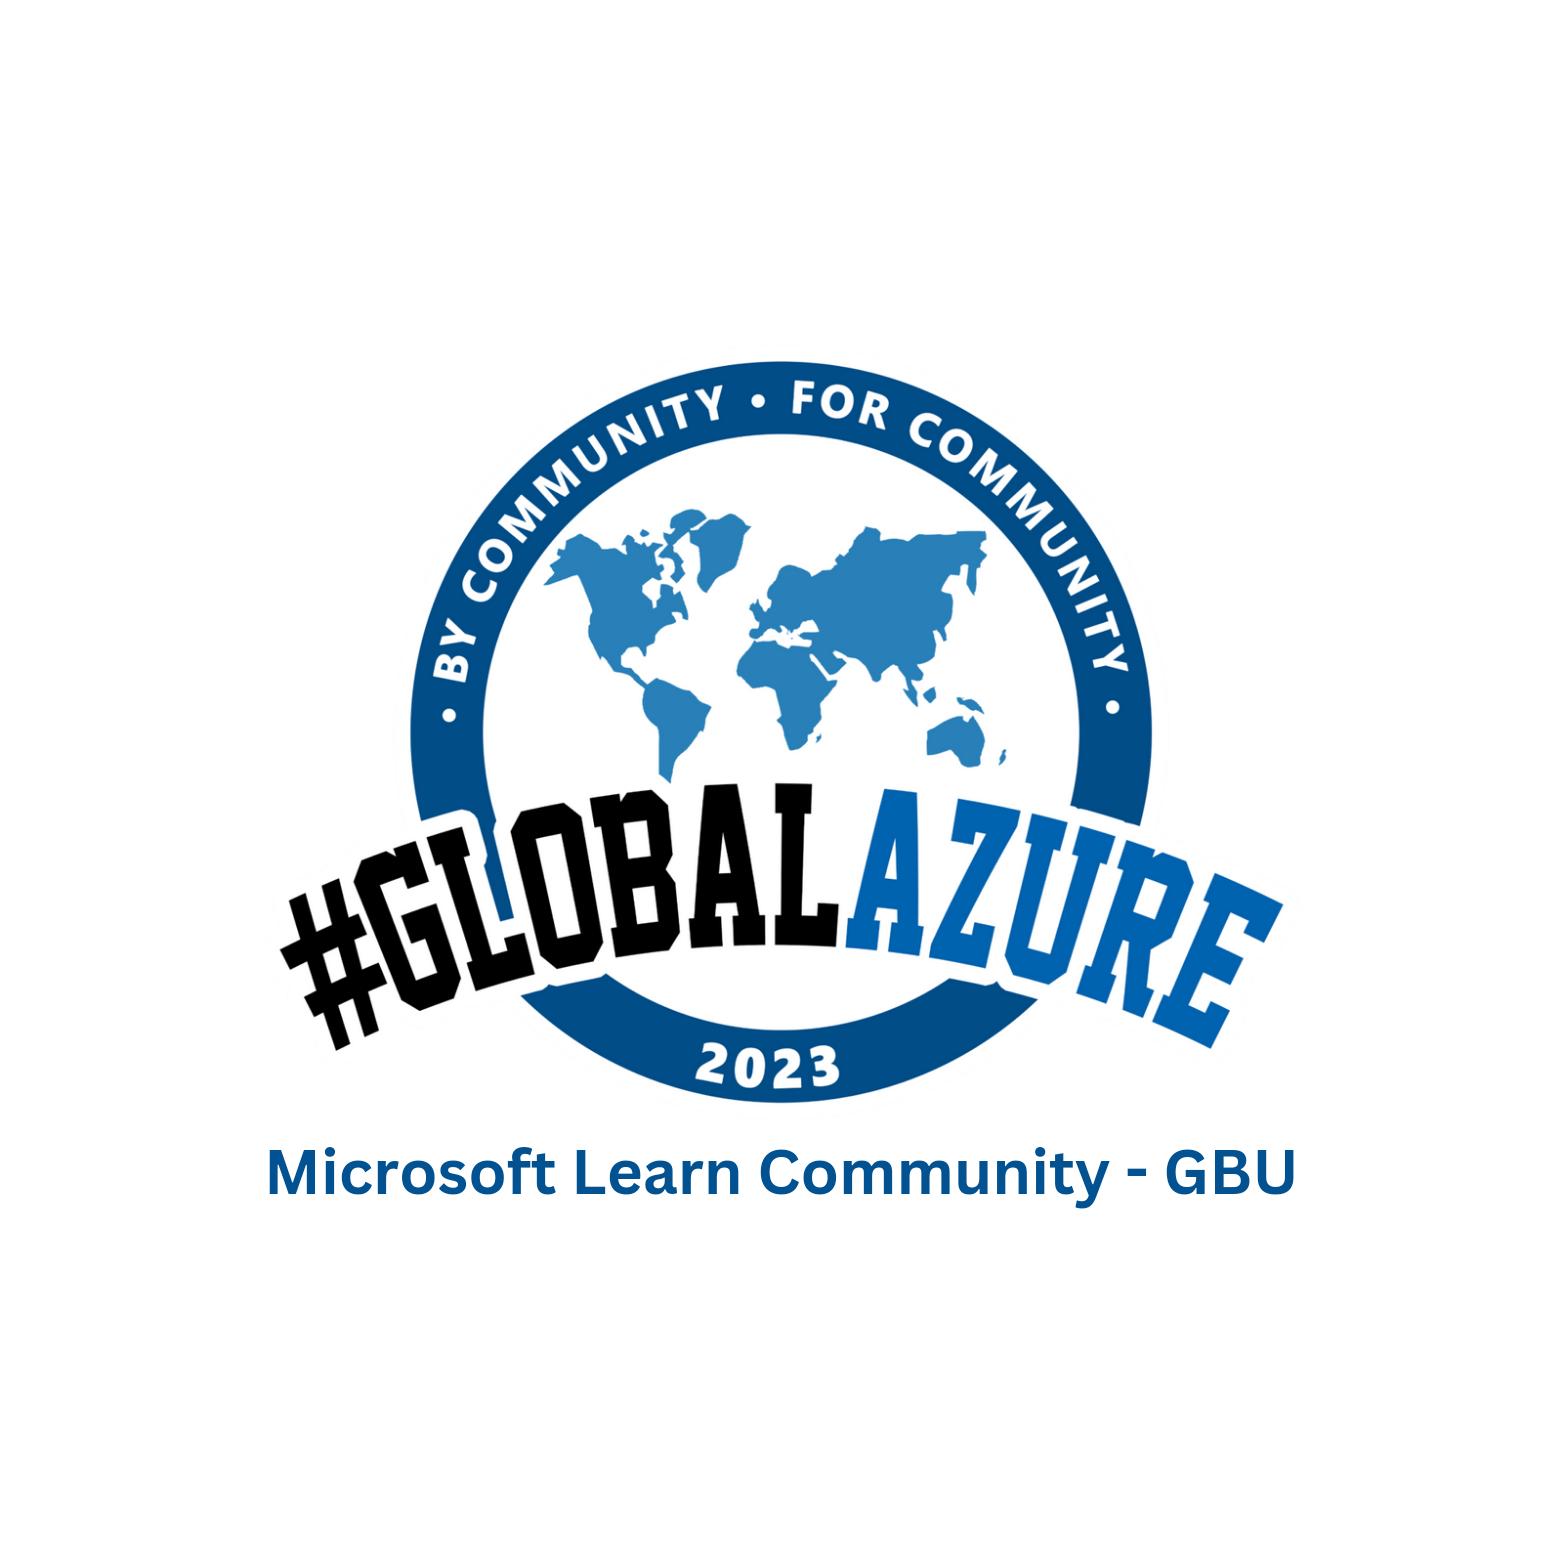 Microsoft Learn Community - GBU